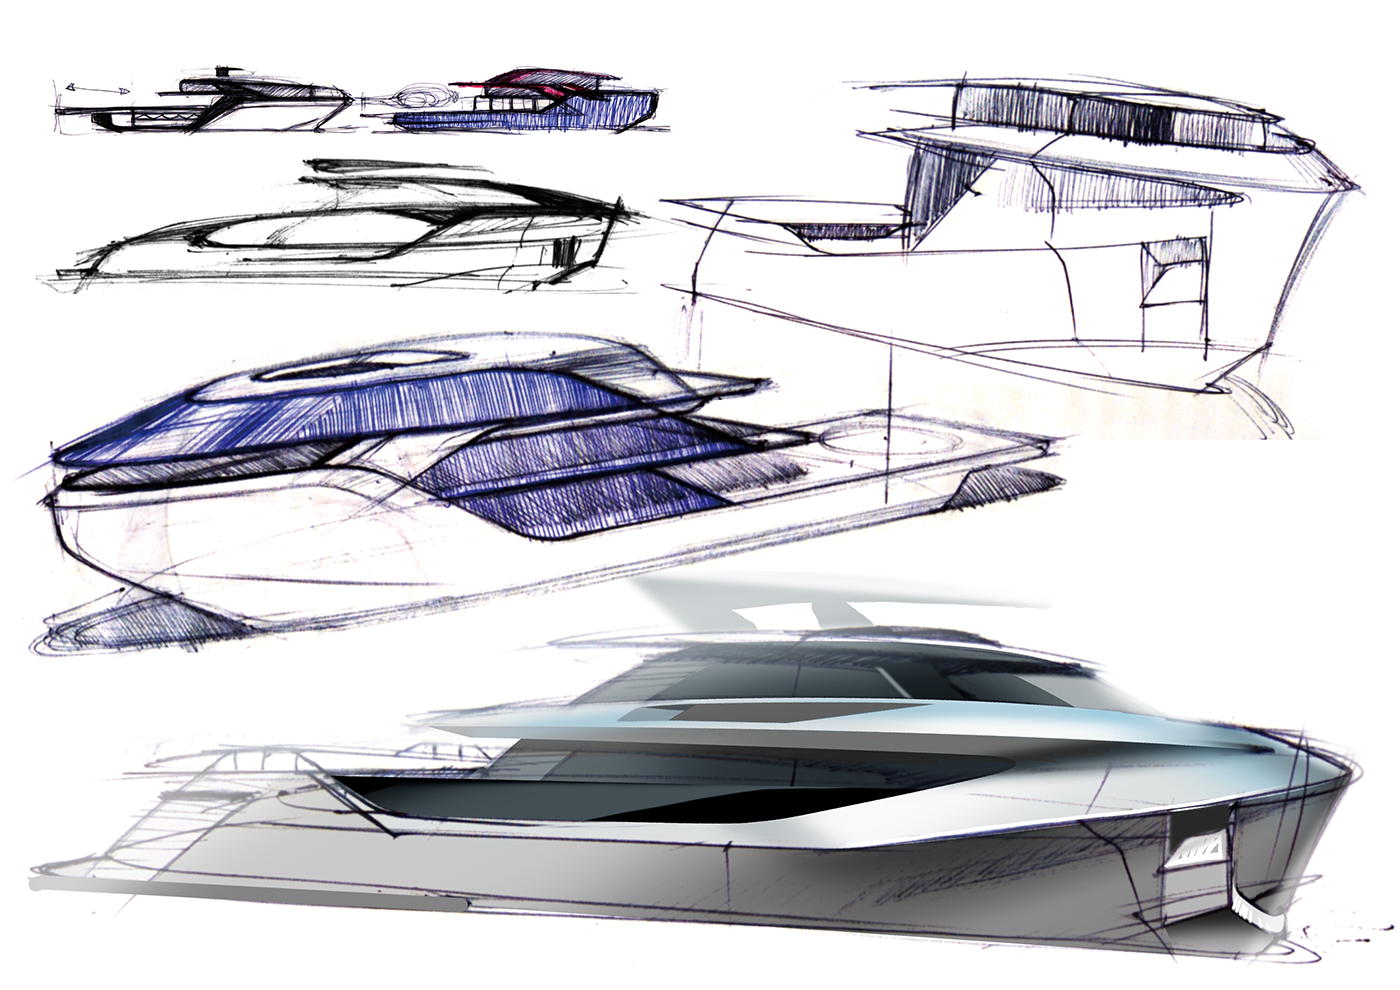 Yacht Design Transportation Design interior design  industrial design  architecture